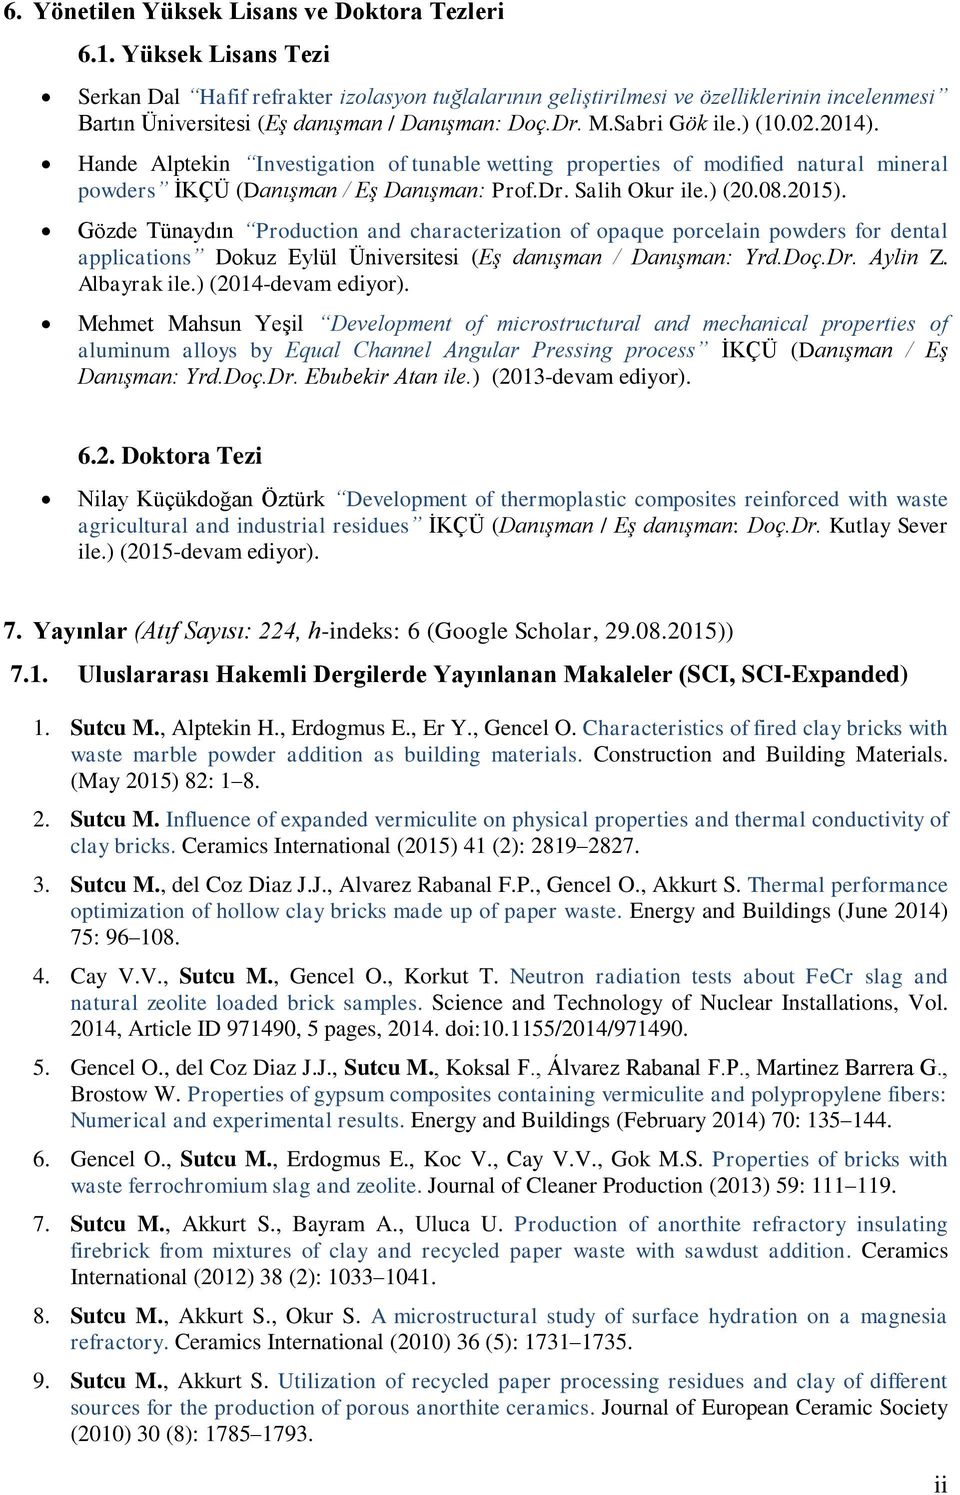 Hande Alptekin Investigation of tunable wetting properties of modified natural mineral powders İKÇÜ (Danışman / Eş Danışman: Prof.Dr. Salih Okur ile.) (20.08.2015).